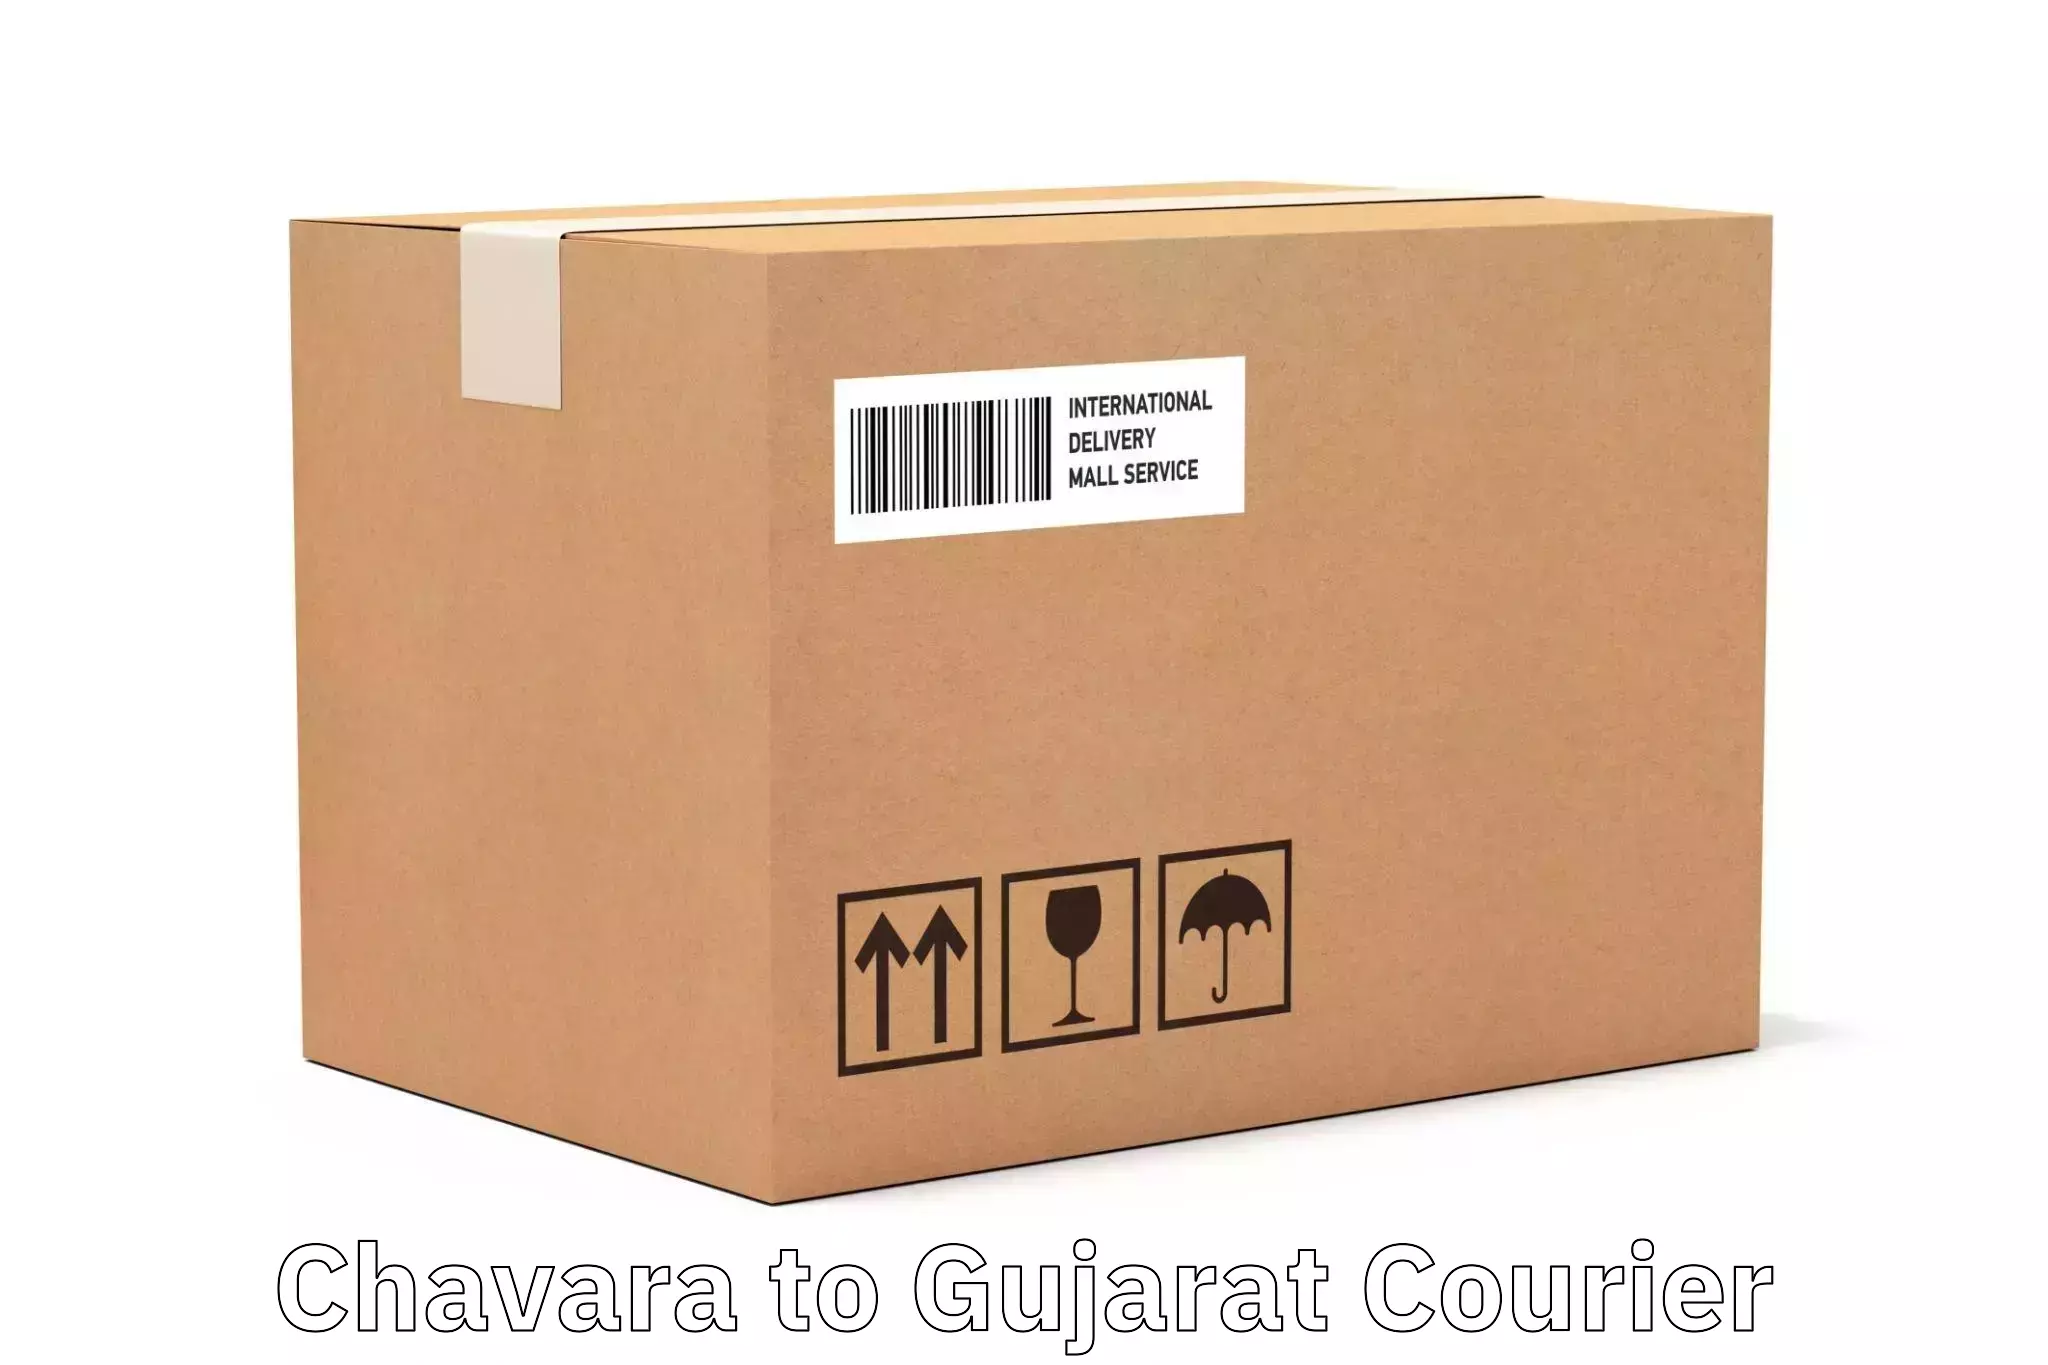 Express delivery capabilities Chavara to Dwarka